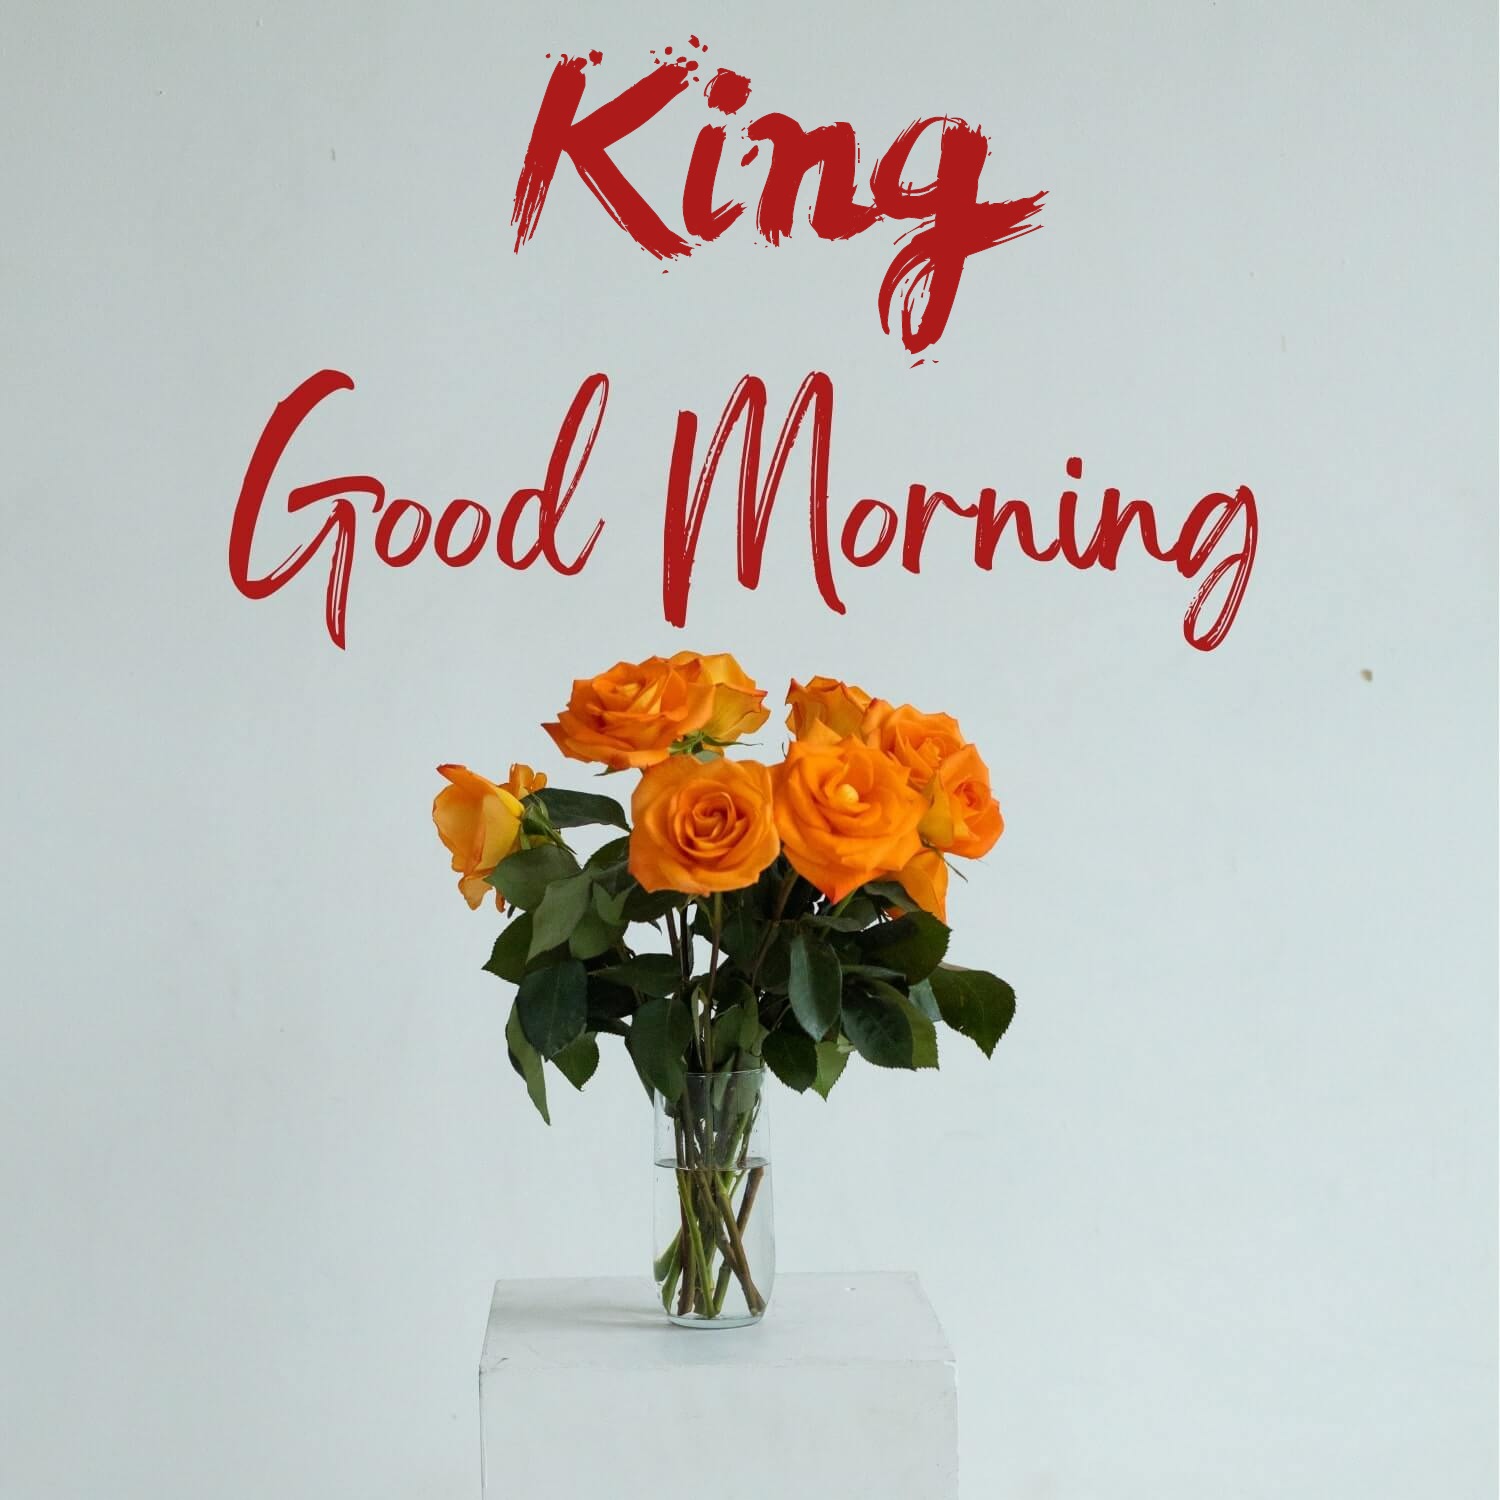 Good Morning King Images